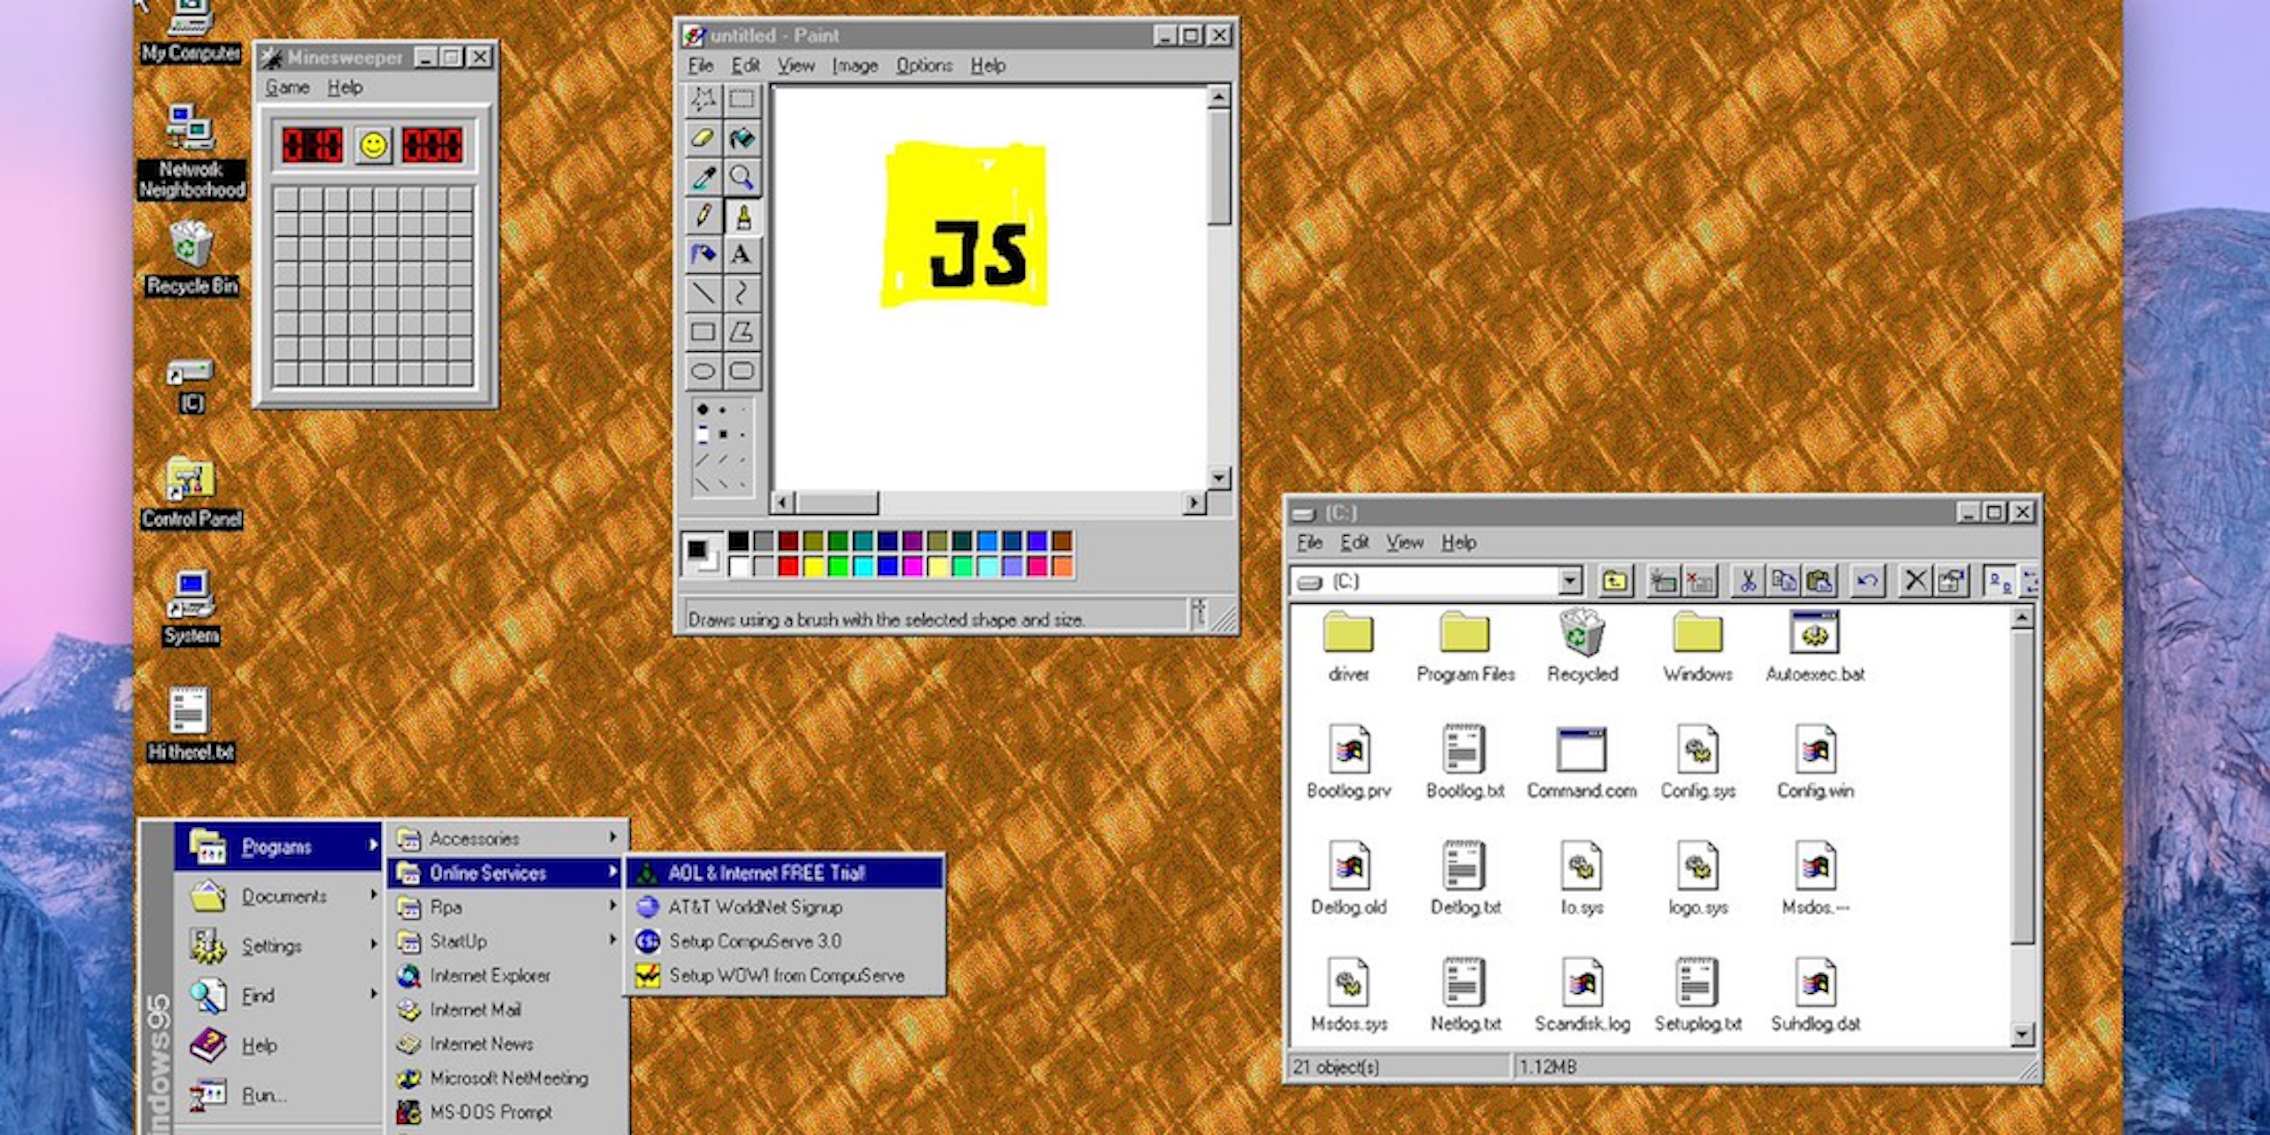 You can download Windows 95 as a desktop app